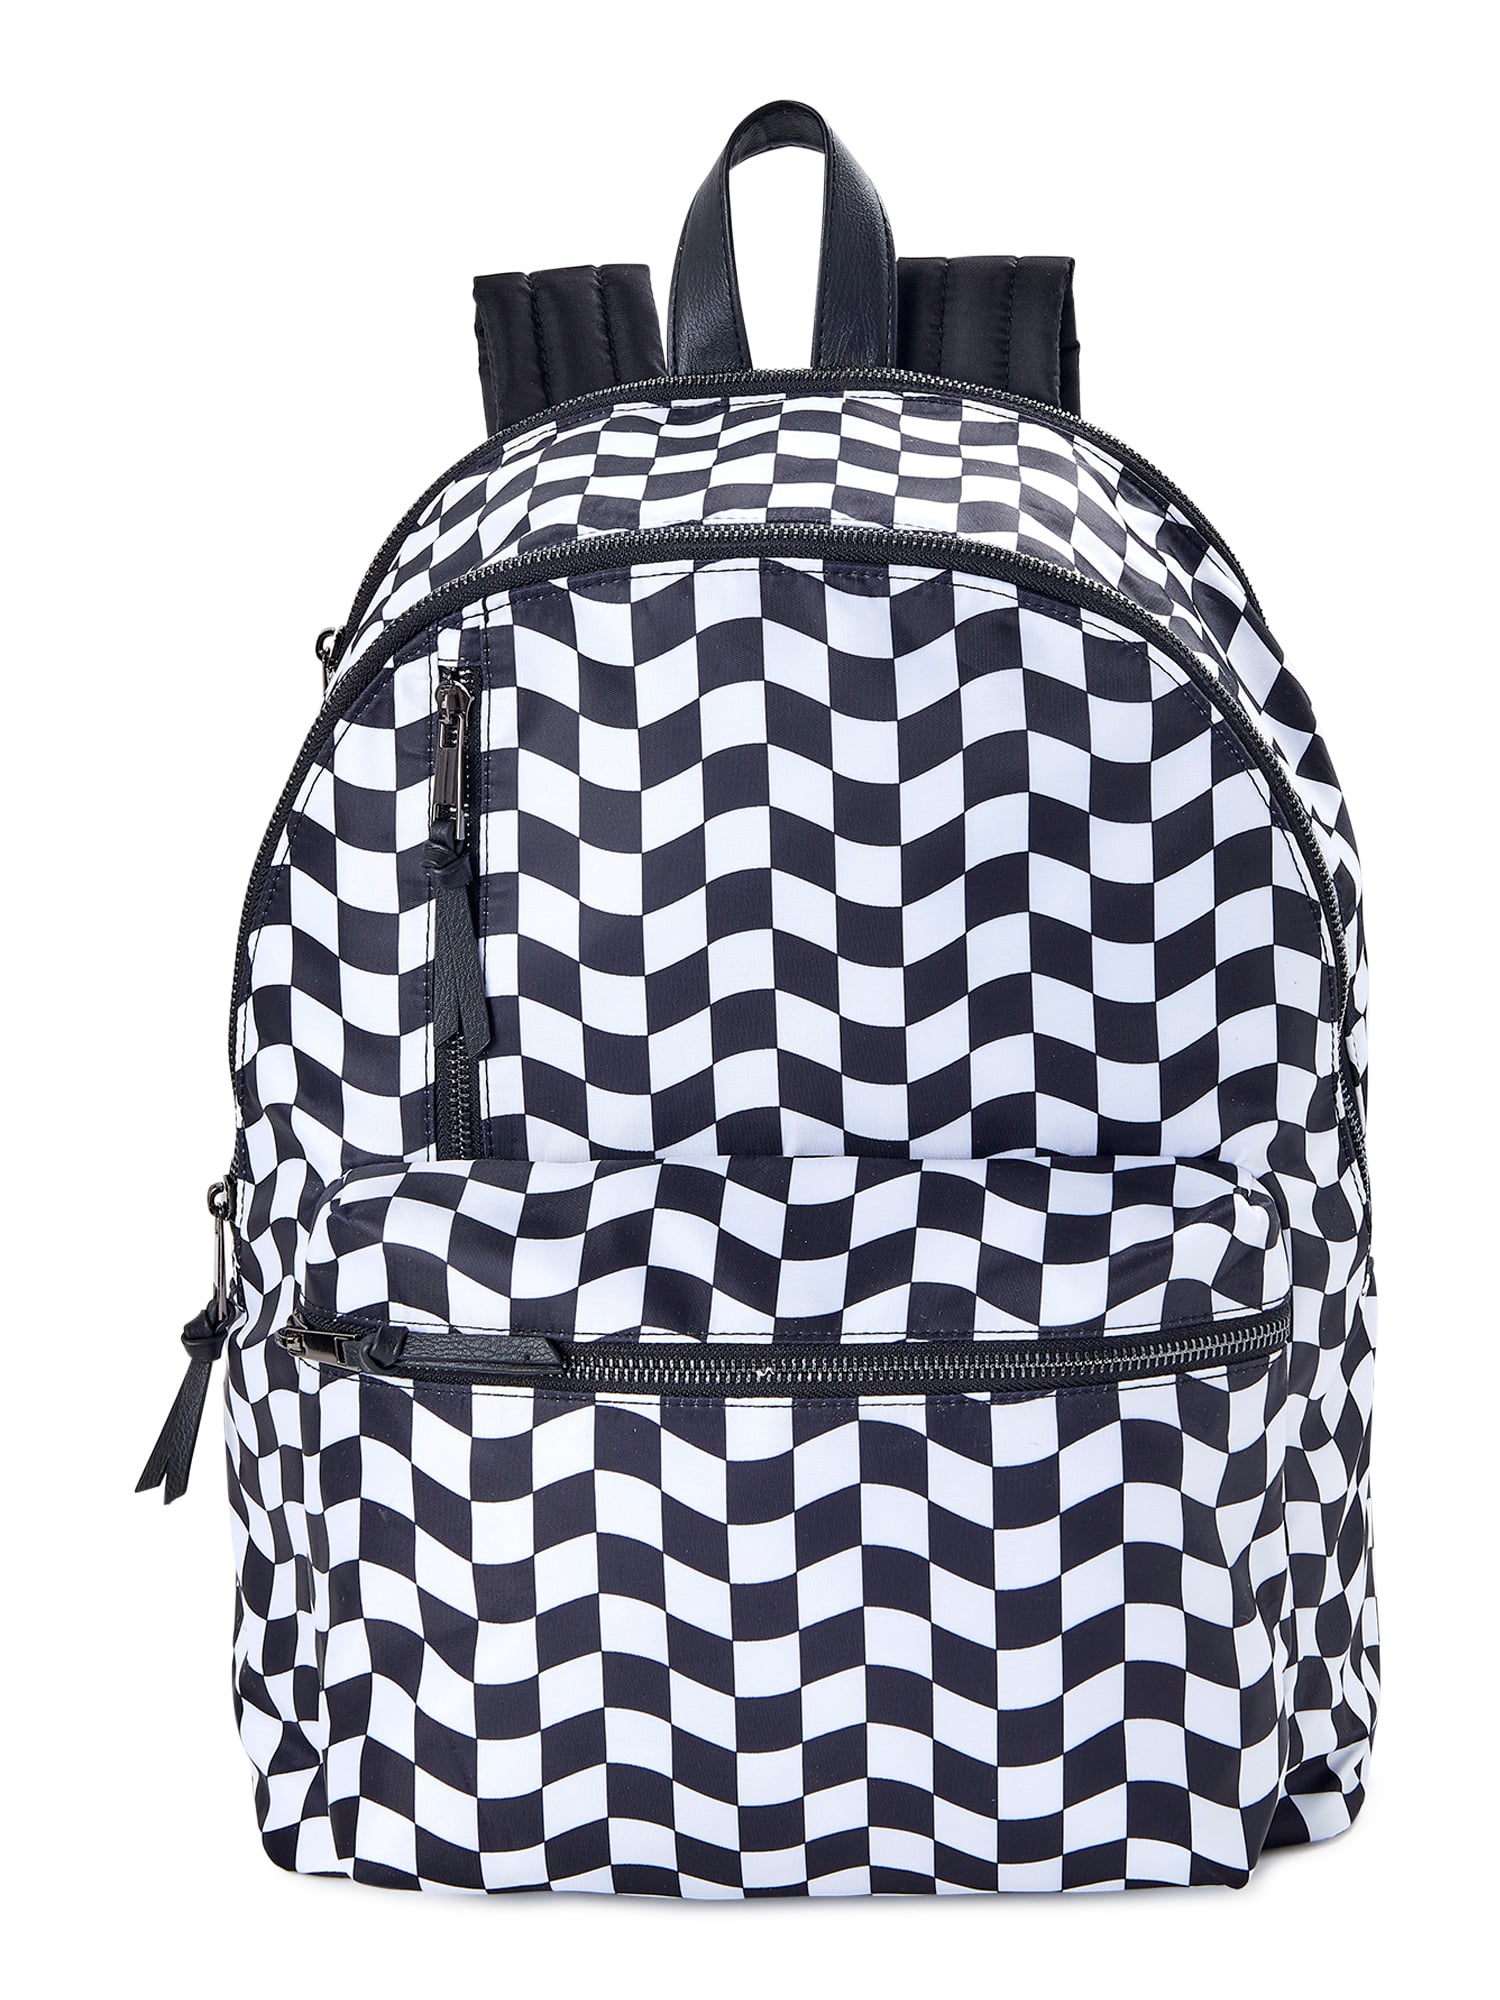 No Boundaries Women's Dome Zip Backpack, Black White Checker